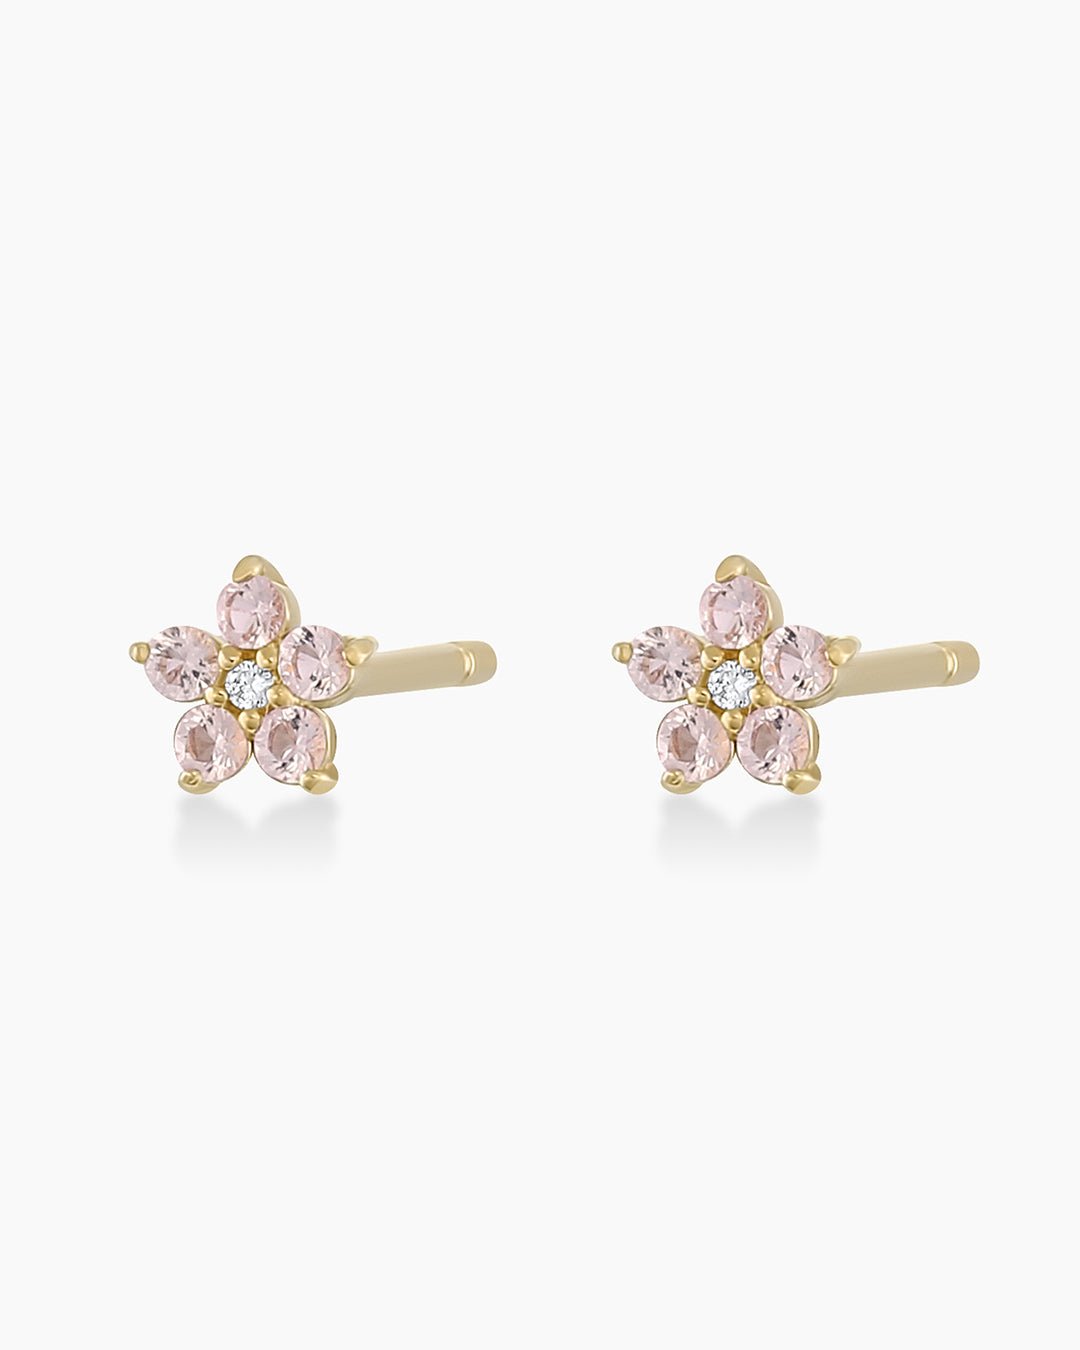 Claire studsDiamond Flower charm studs  flower earrings || option::14k Solid Gold